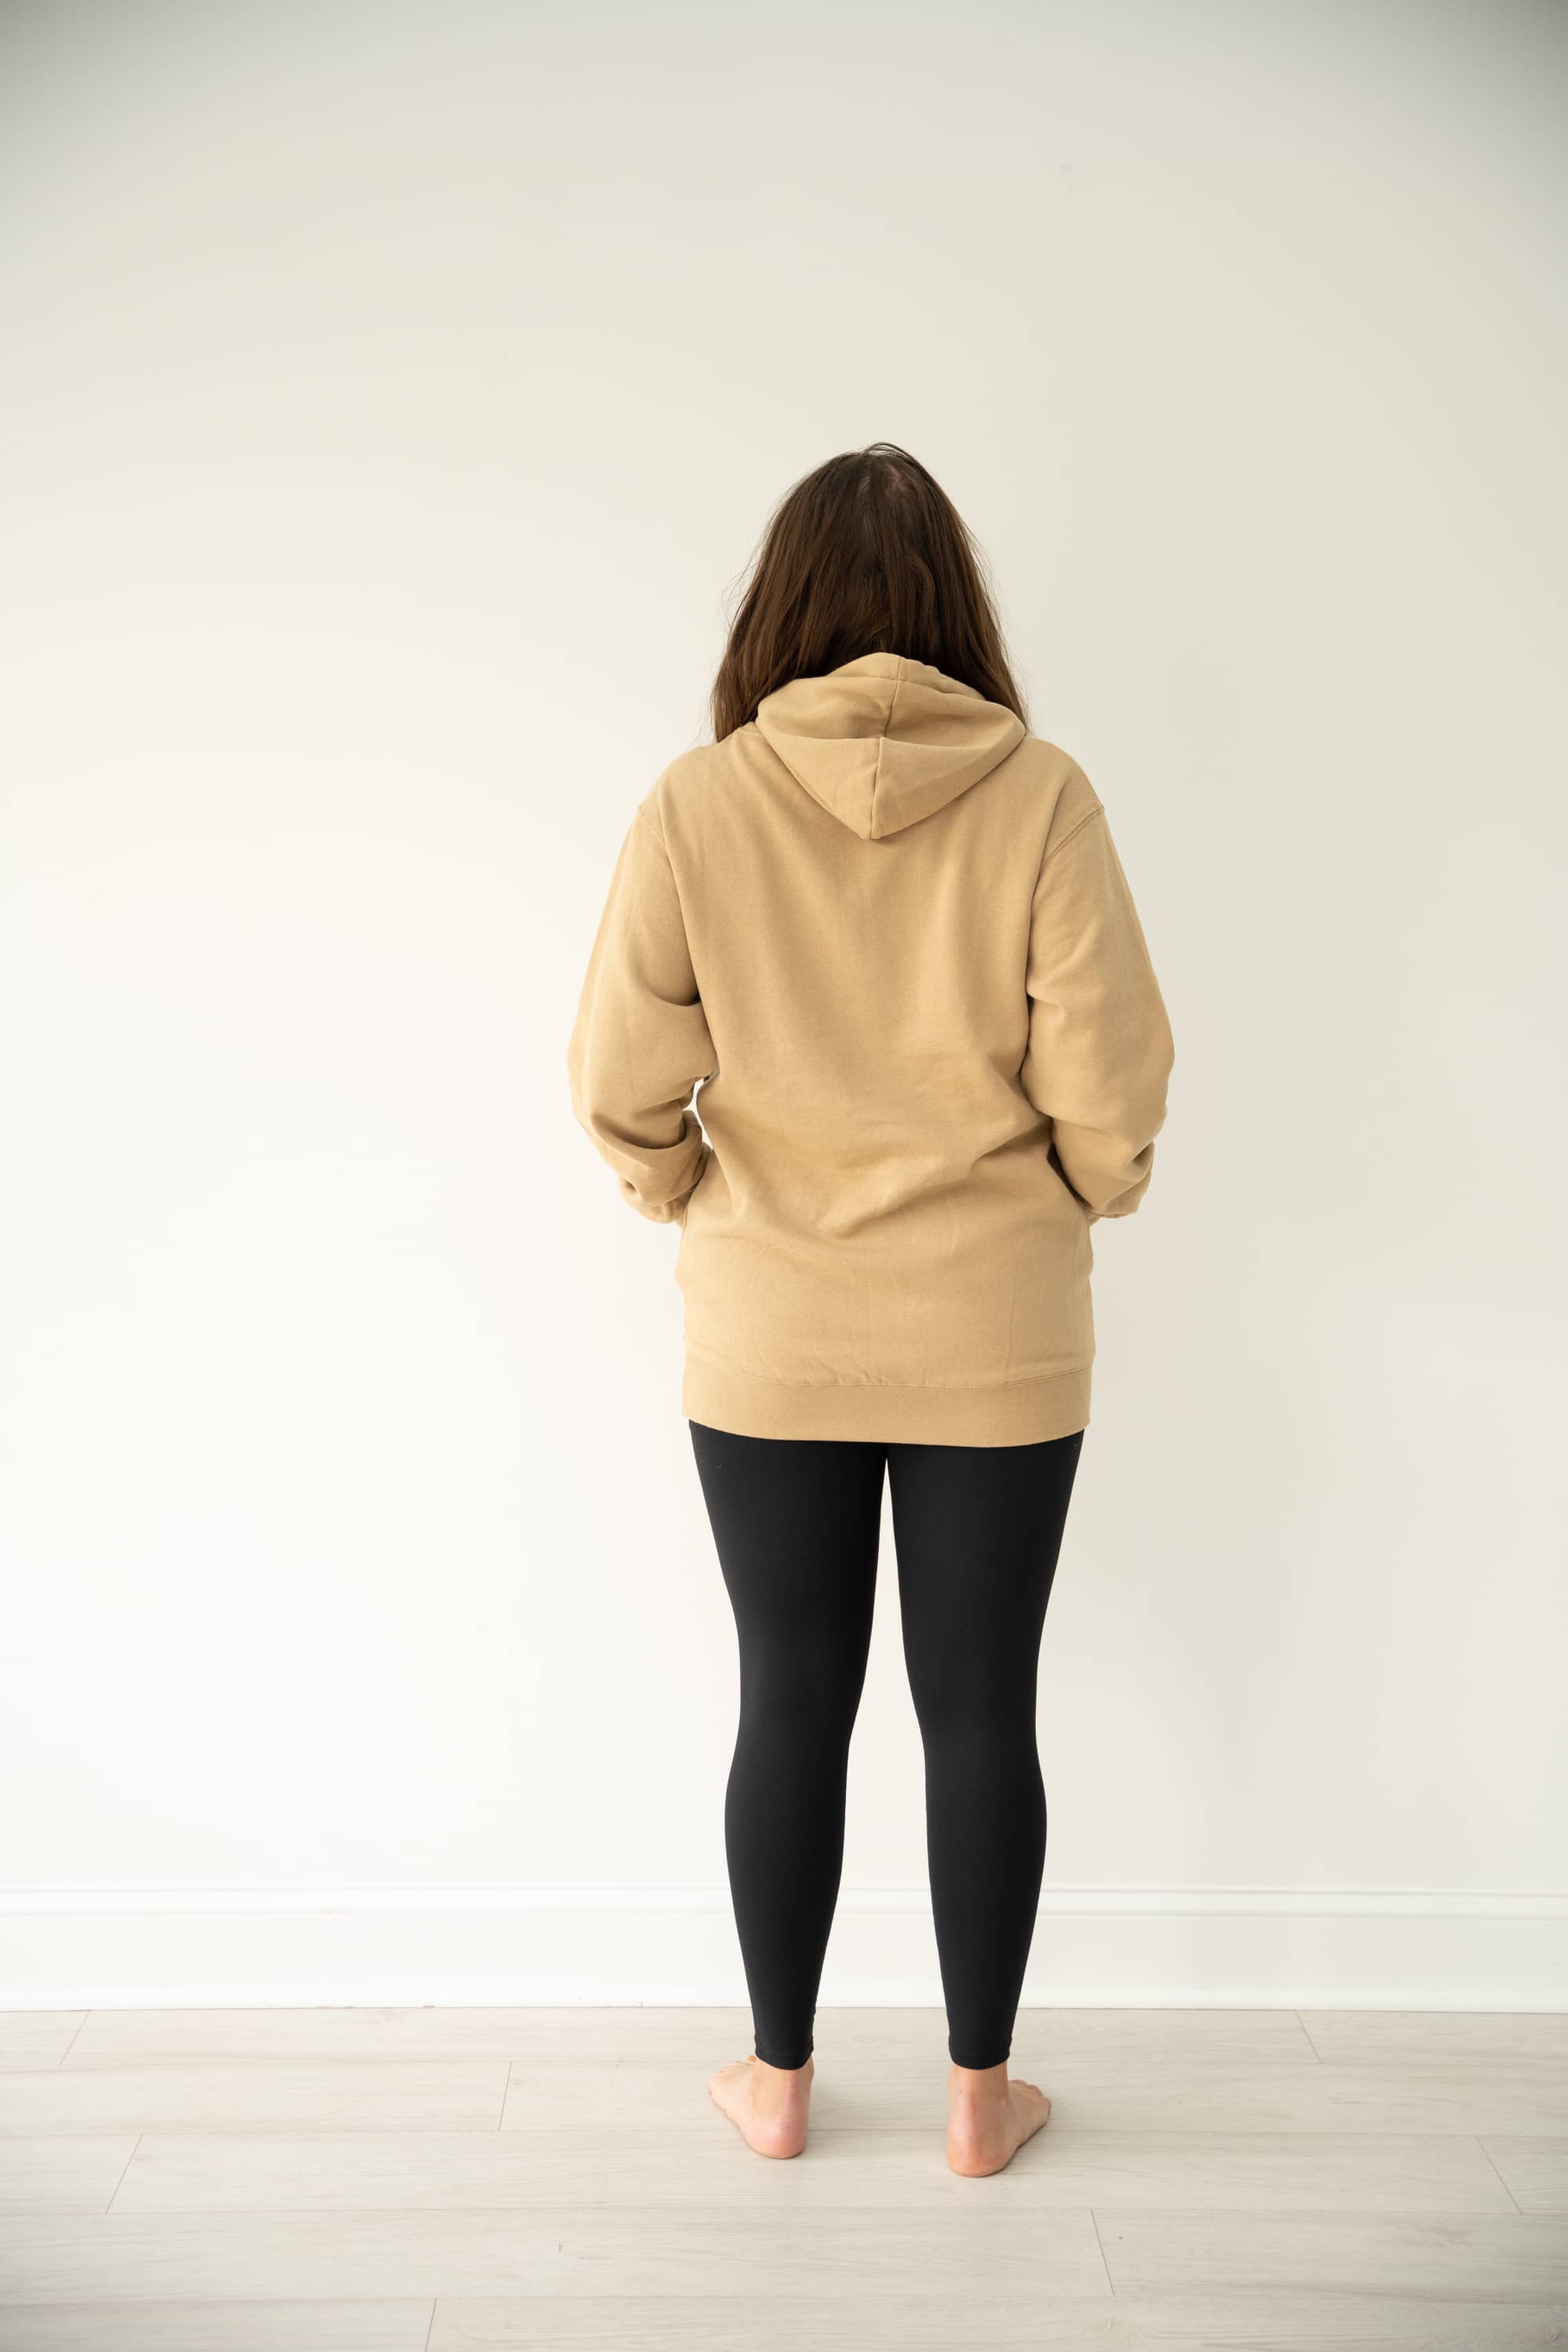 GOLDEN oversized hoodie tunic in Tan with front kangaroo pocket and adjustable hood.